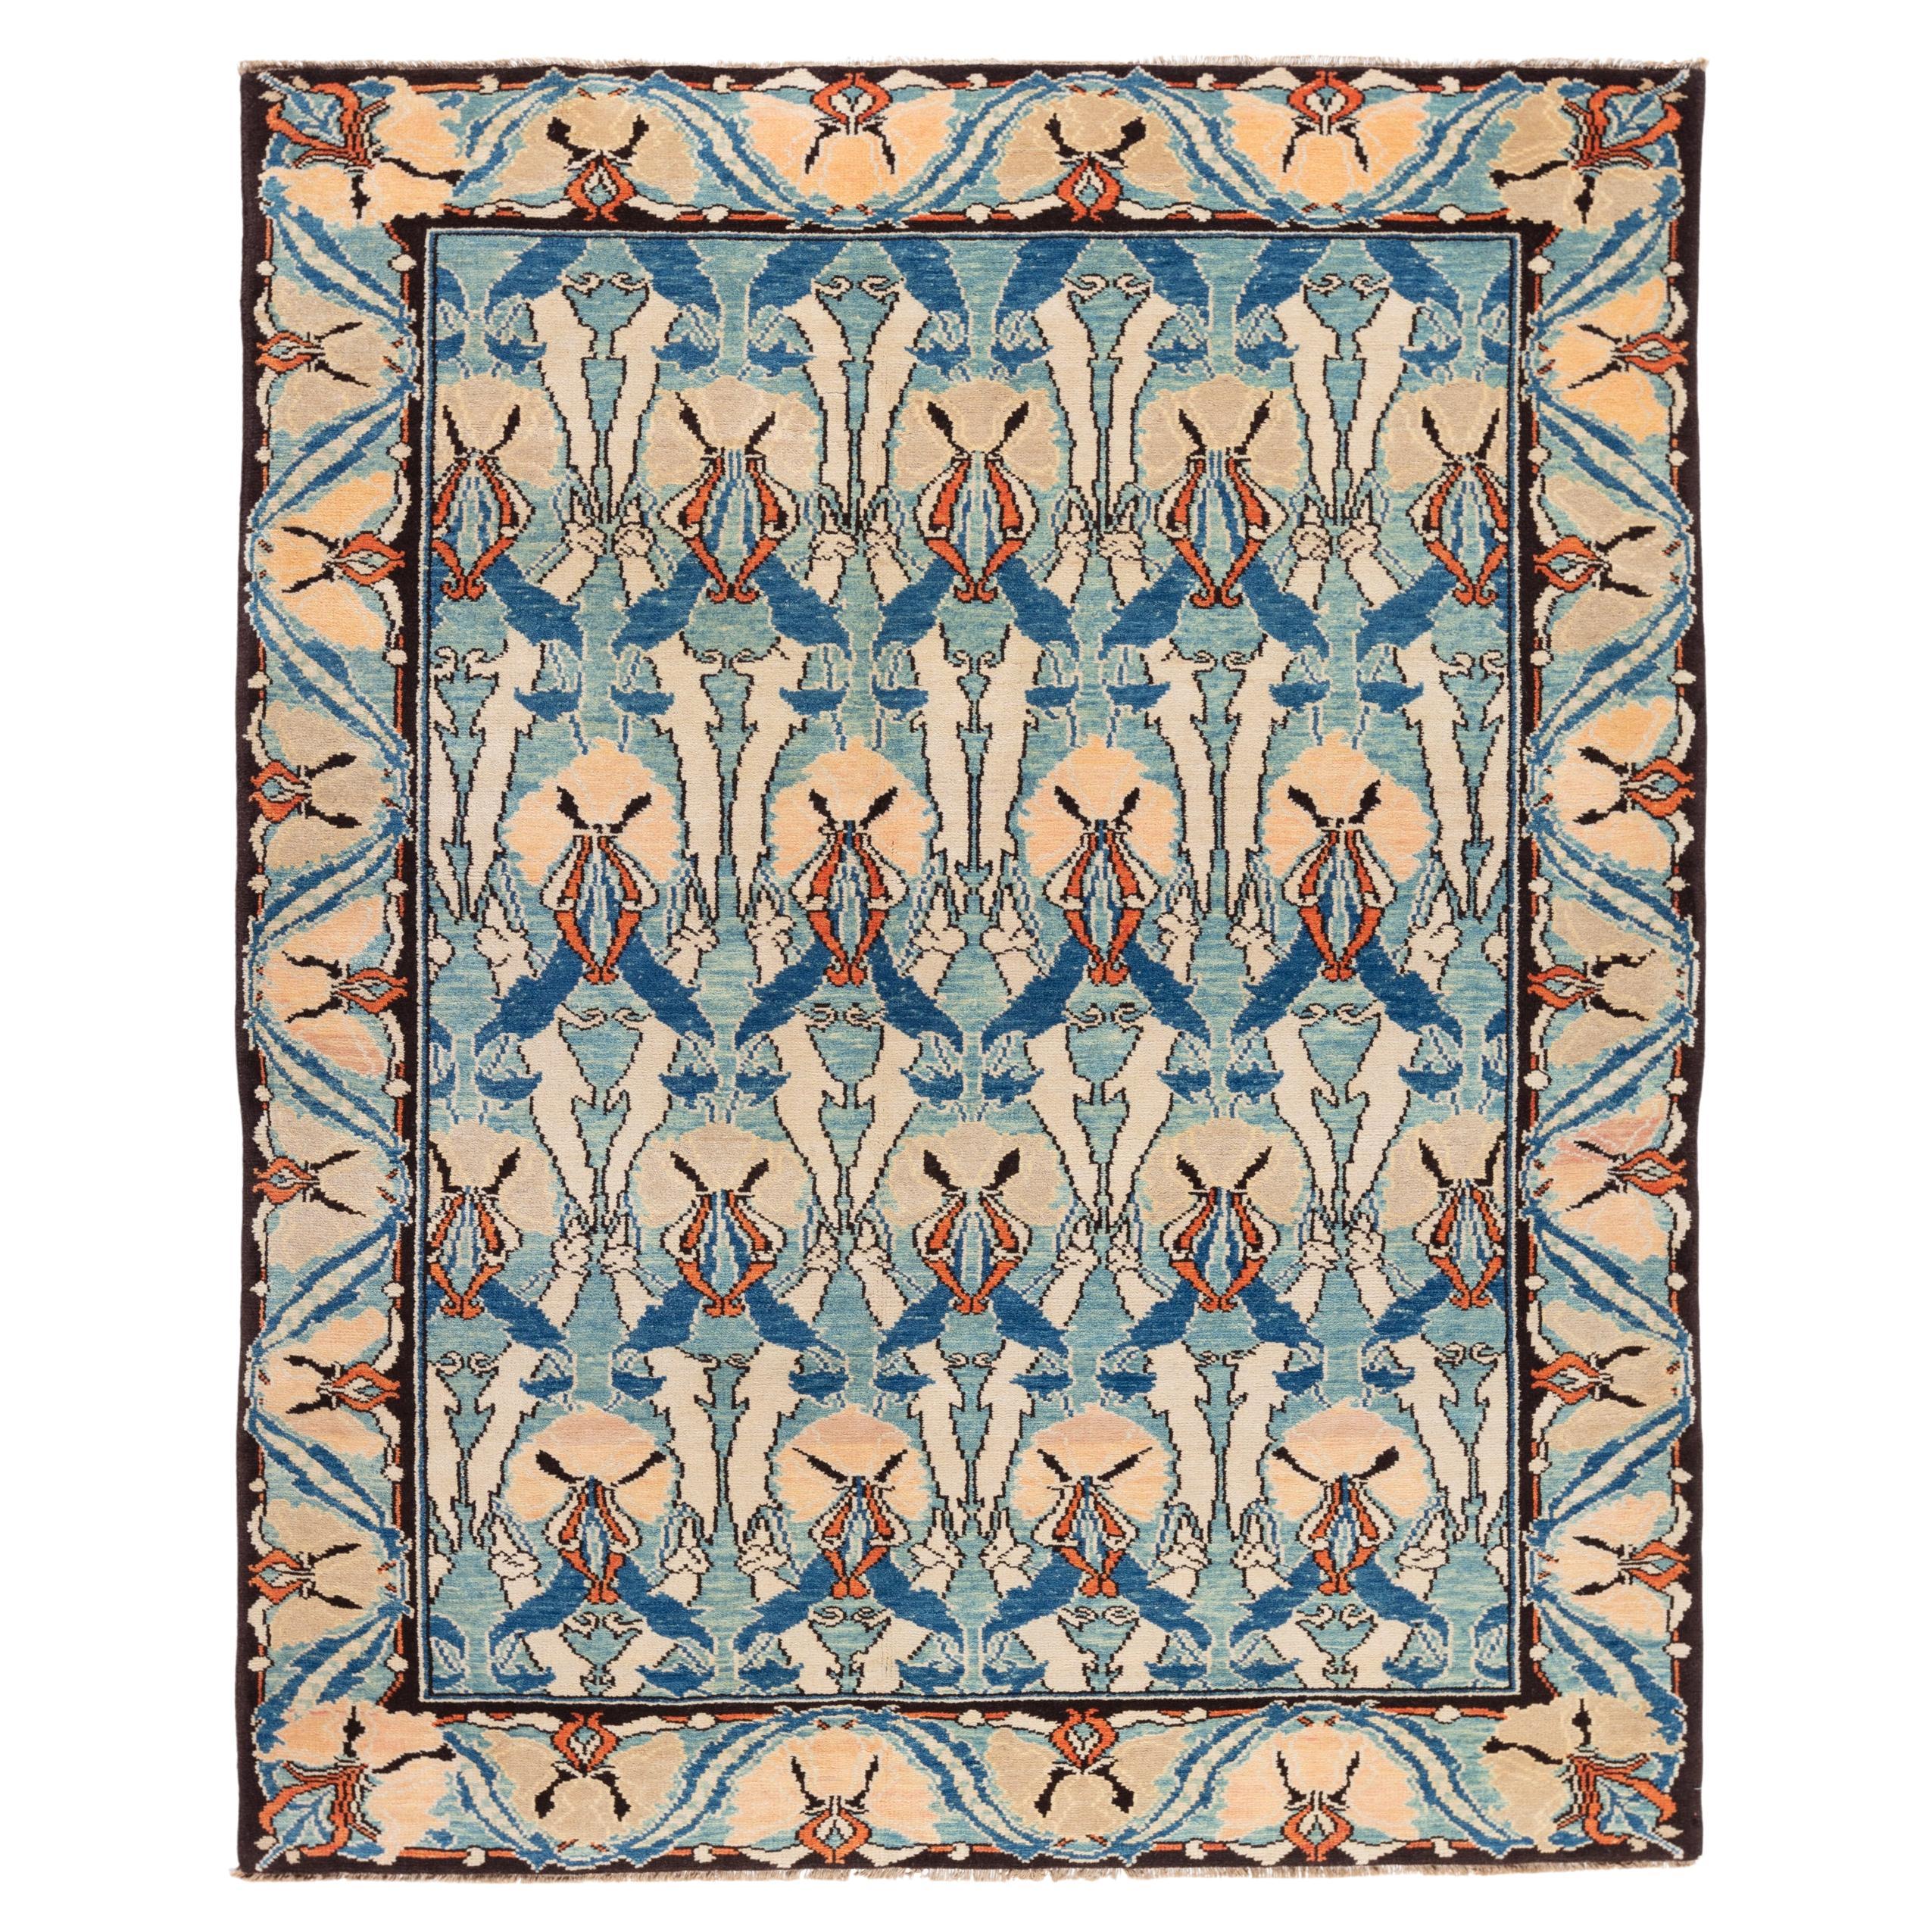 Ararat Rugs William Morris Style Carpet Arts & Crafts Design Natural Dyed